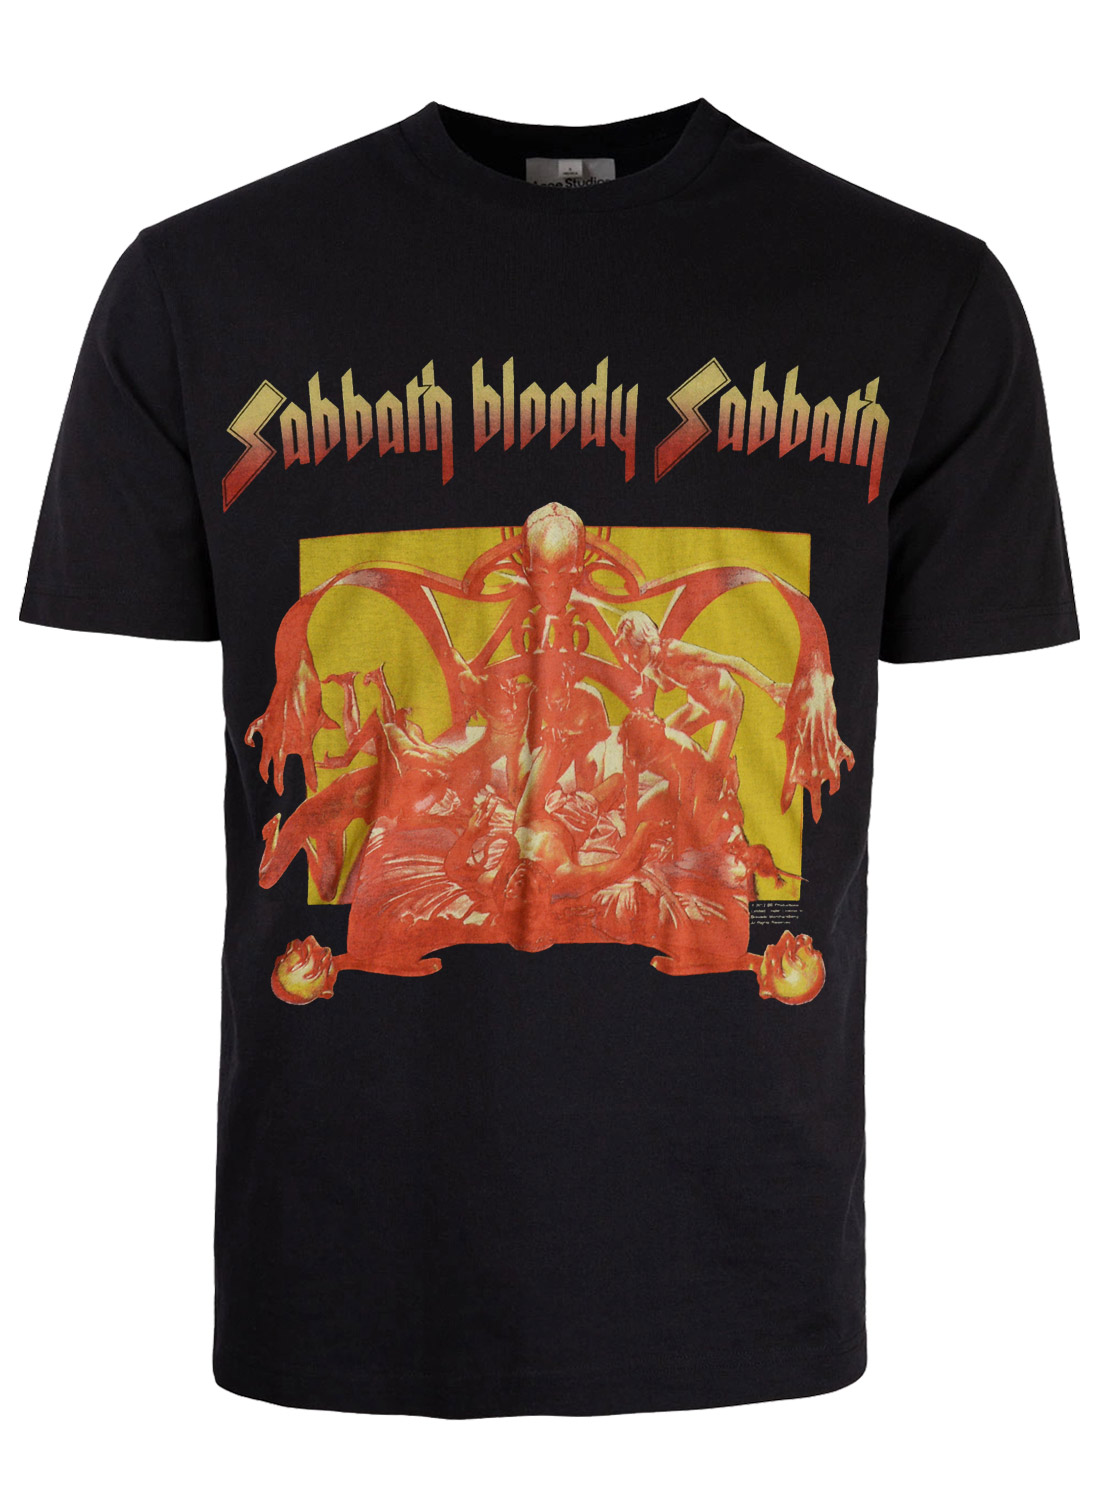 Black Sabbath Bloody Sabbath Album T-shirt